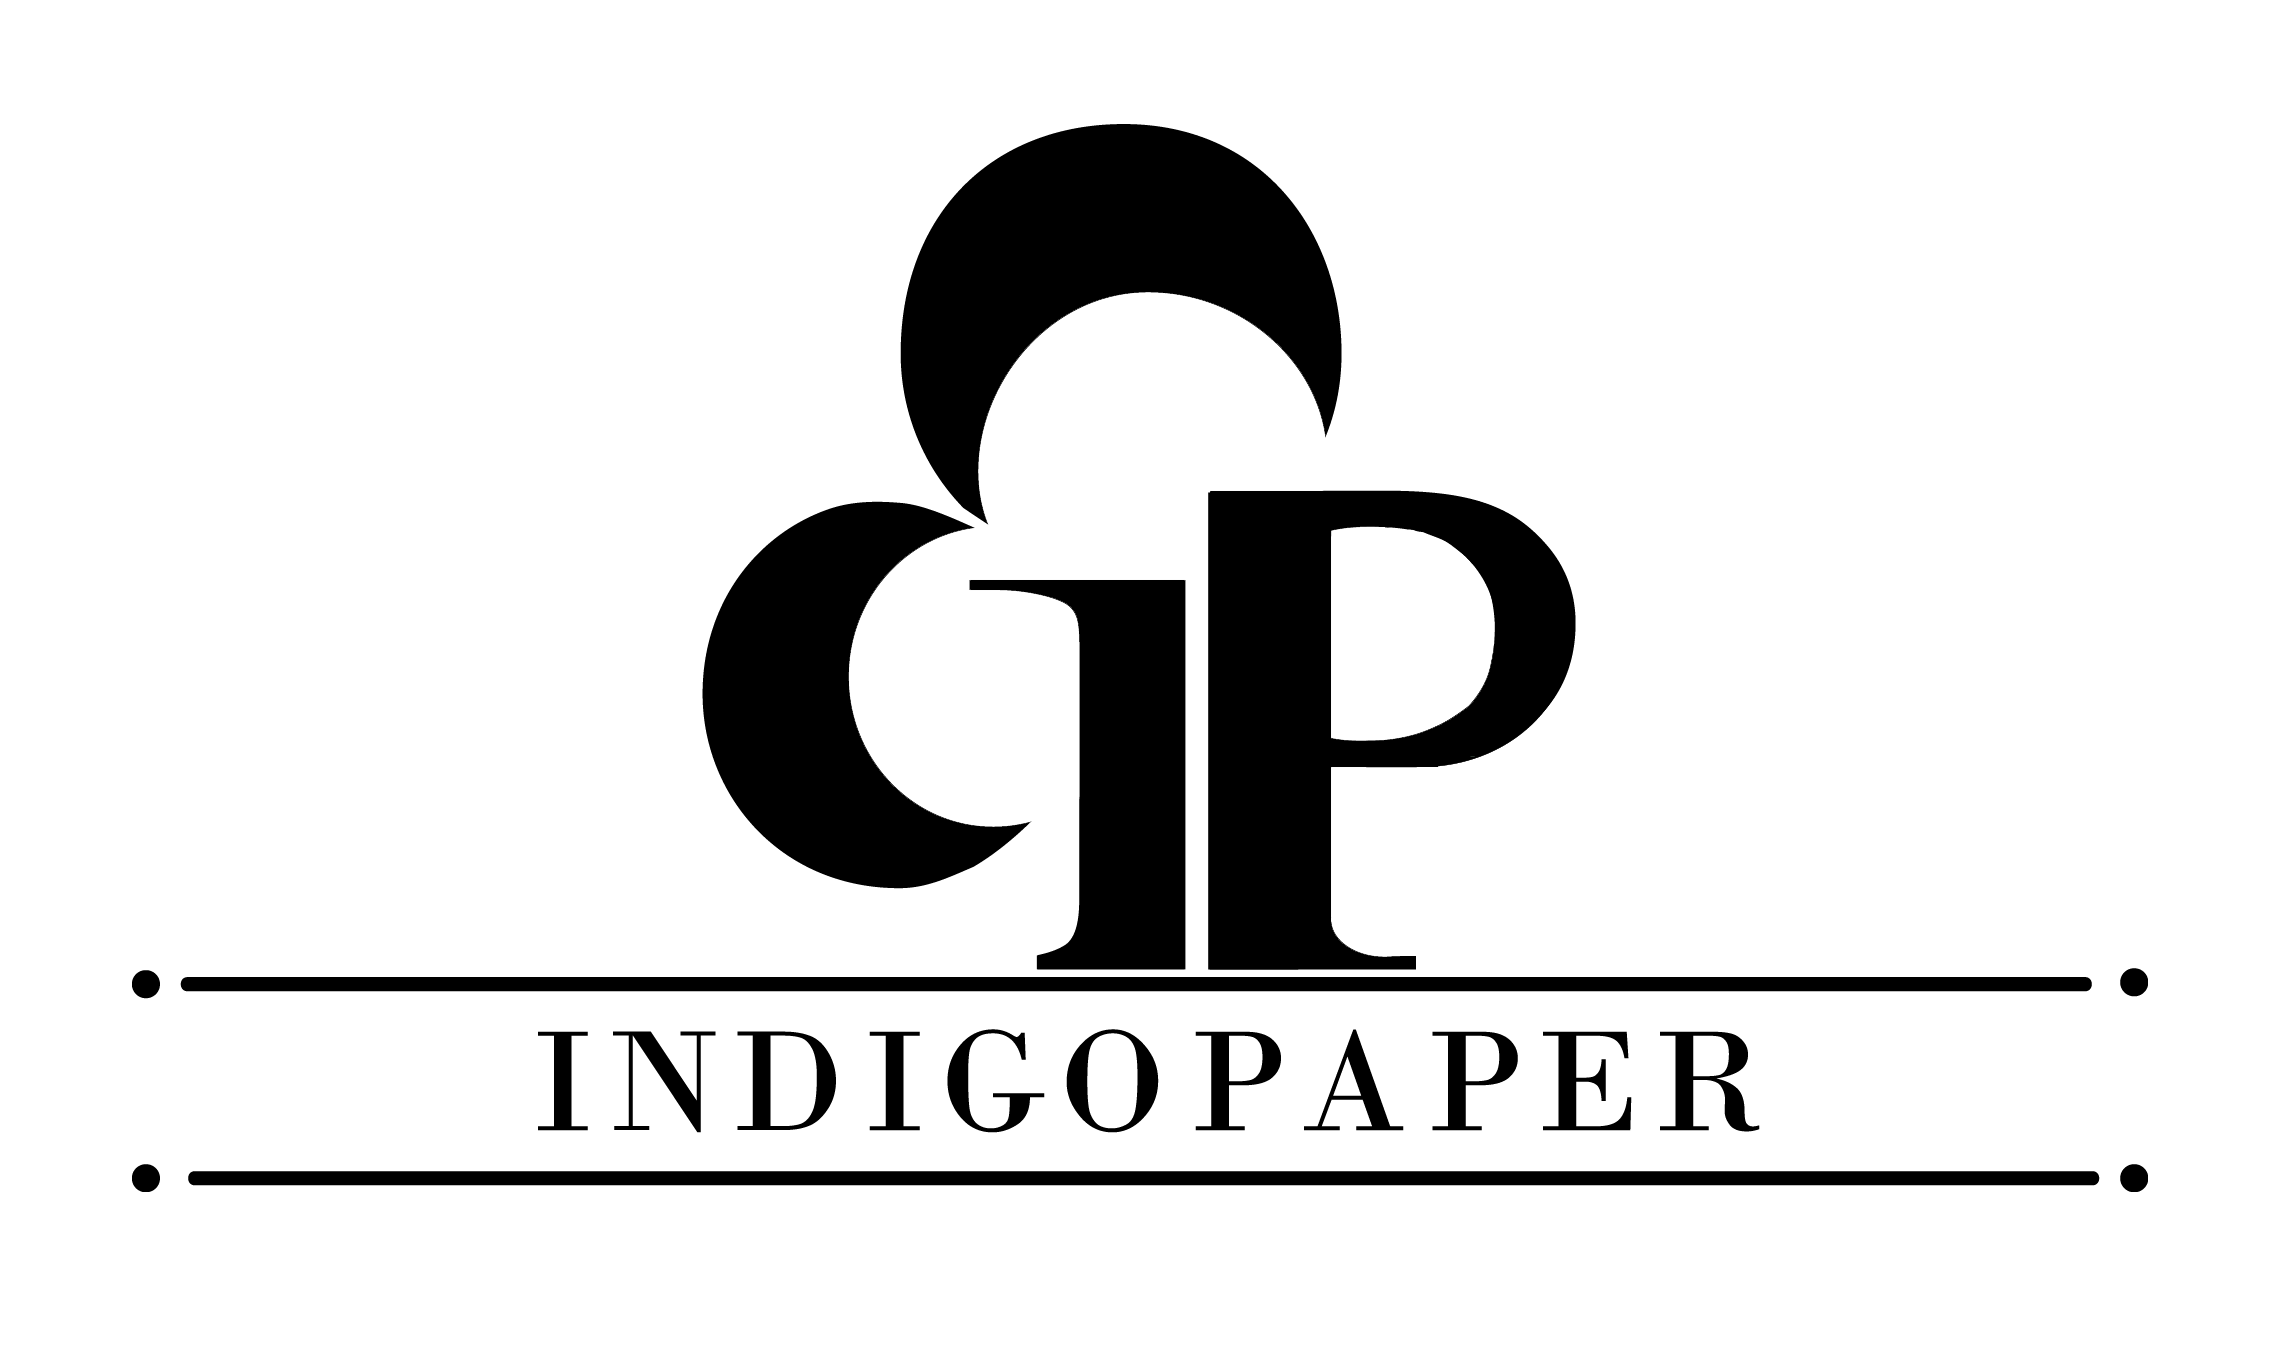 IndigoPaper